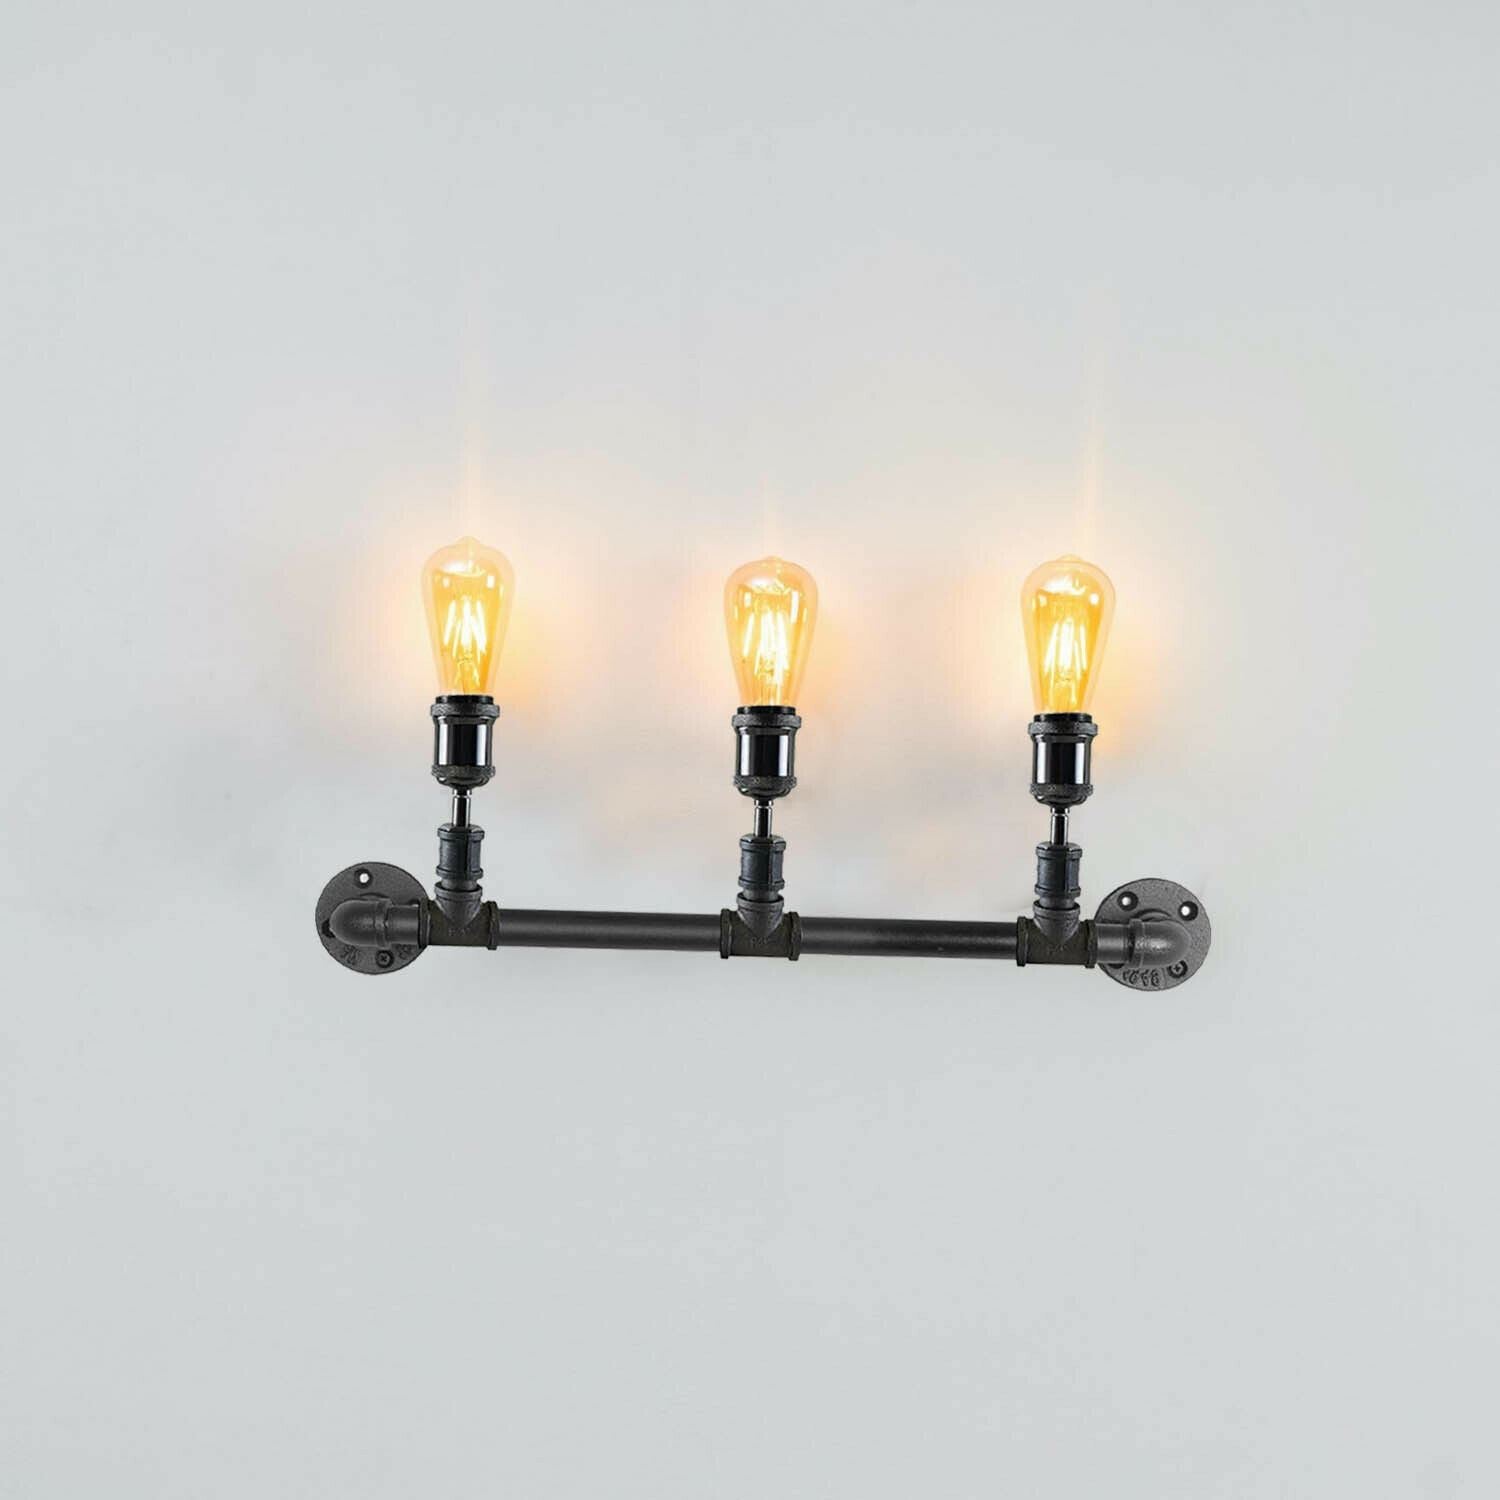 Vintage Industrial Pipe Light Rustic Wall Steampunk Metal Wall Light kits~1243 - LEDSone UK Ltd